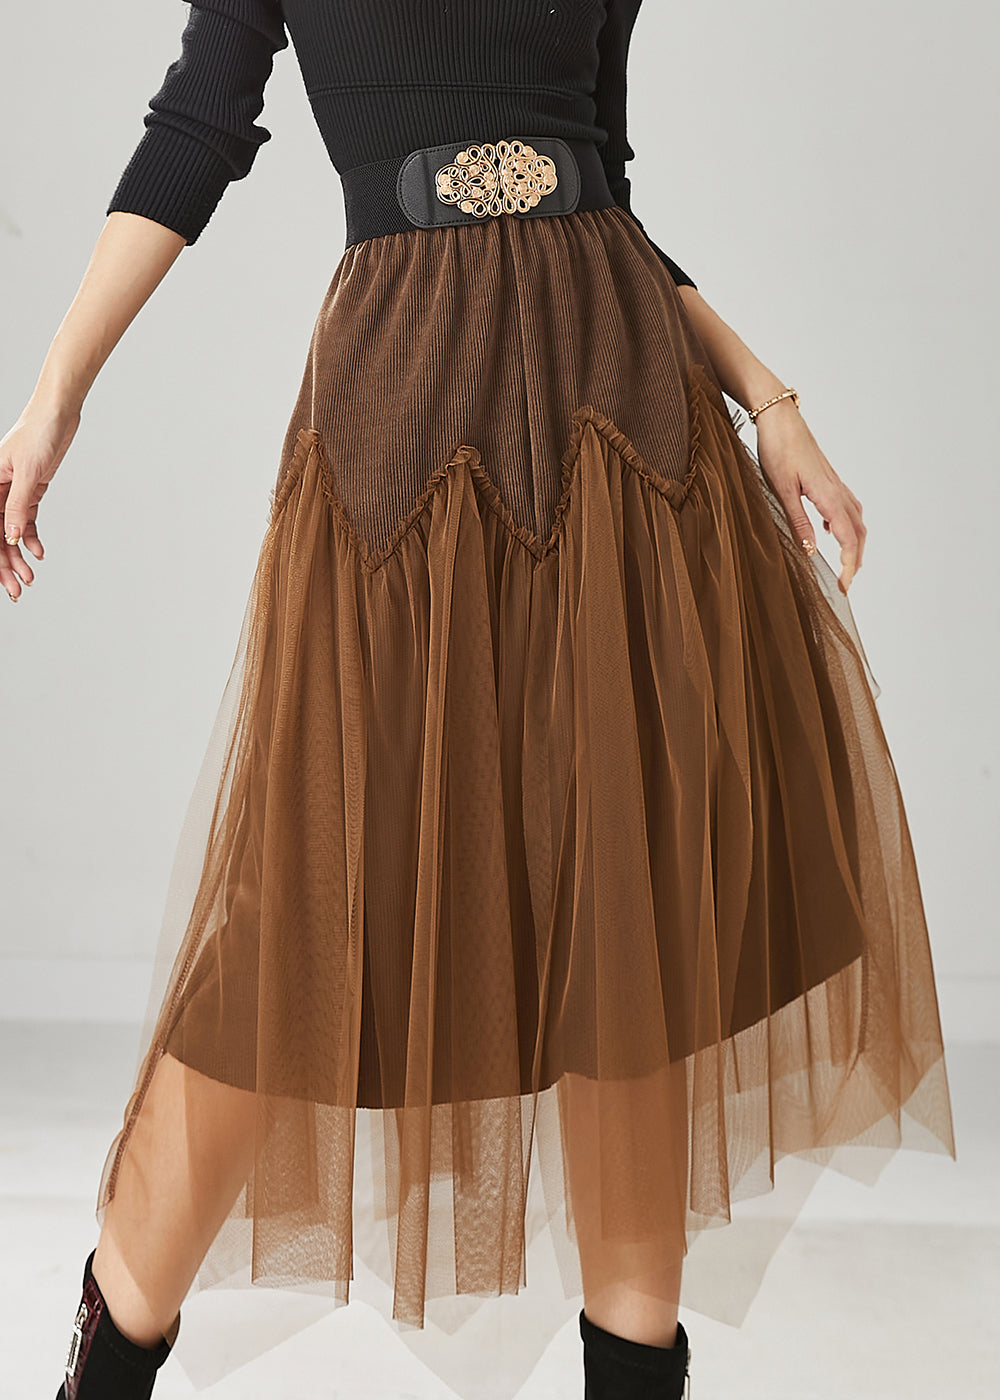 Brown Patchwork Tulle Corduroy Skirt Elastic Waist Spring